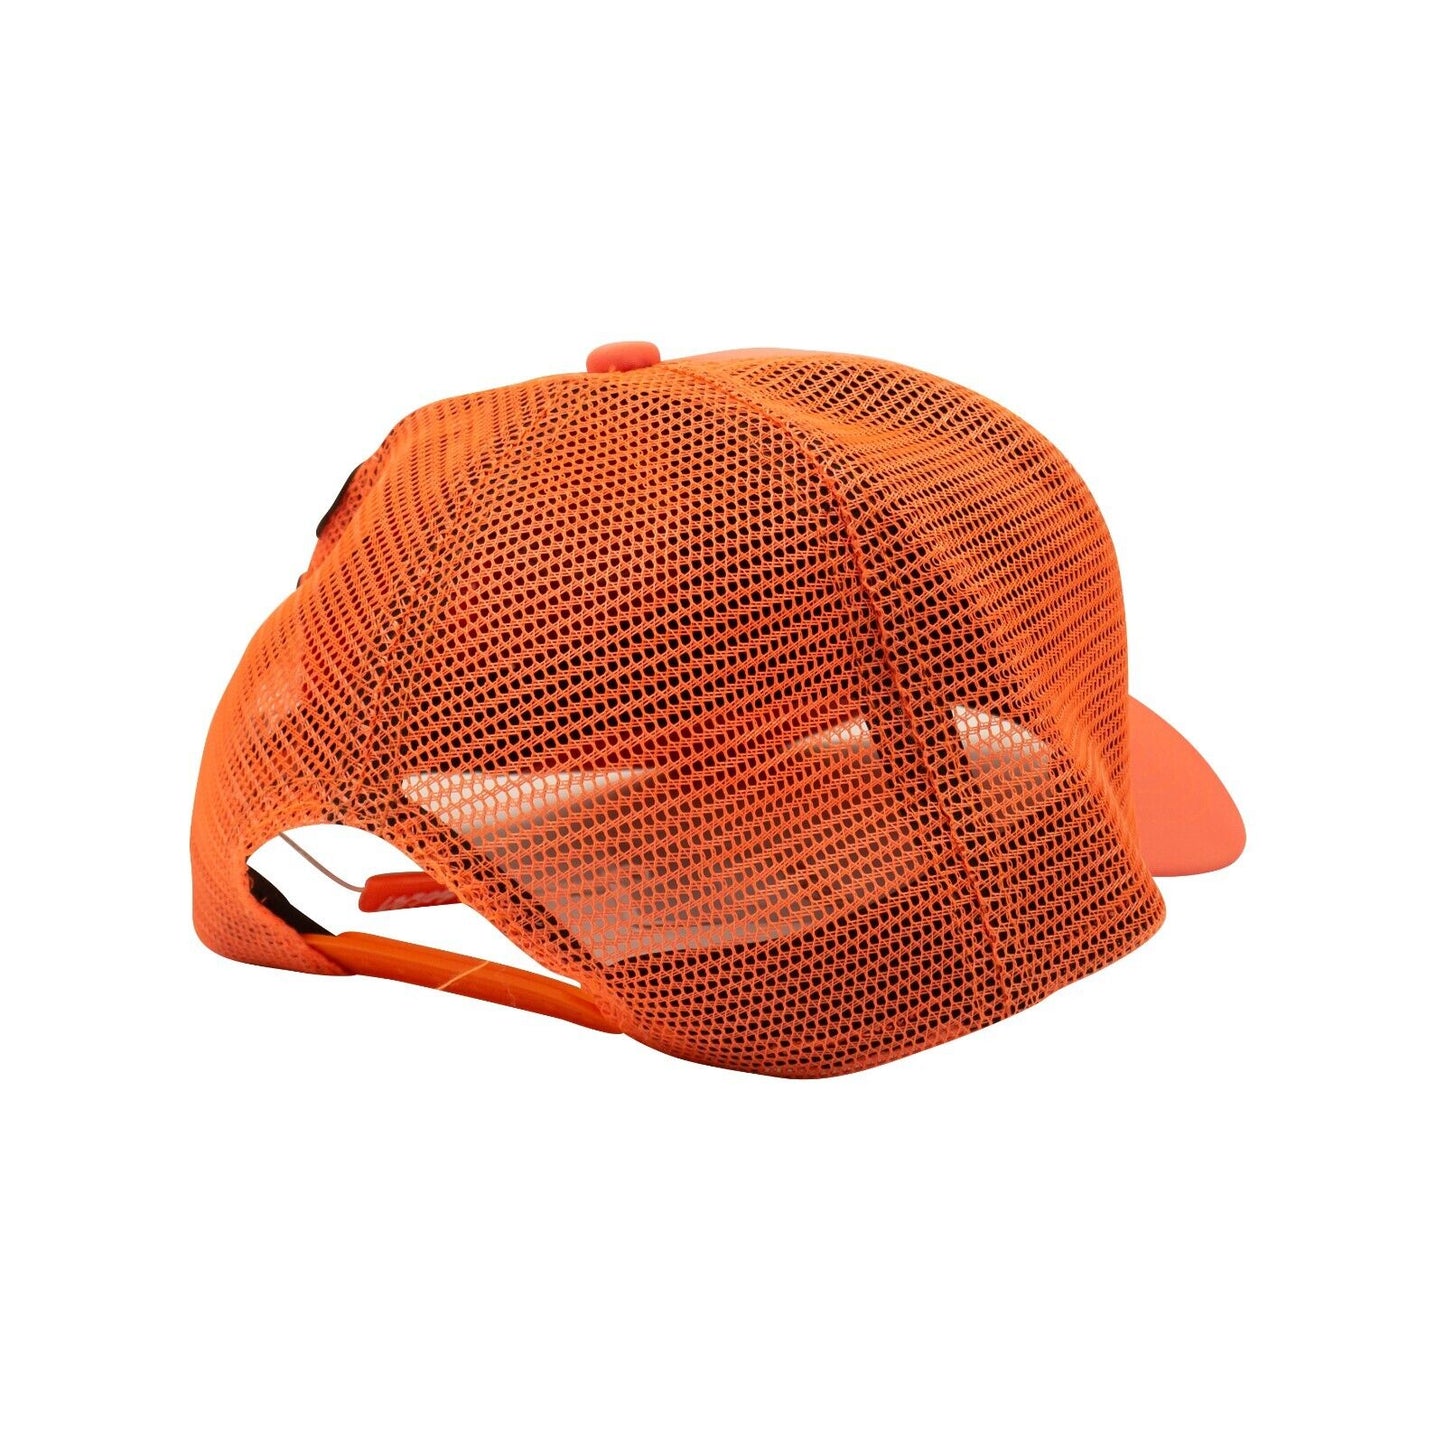 Bossi Skull Trucker Hat - Orange